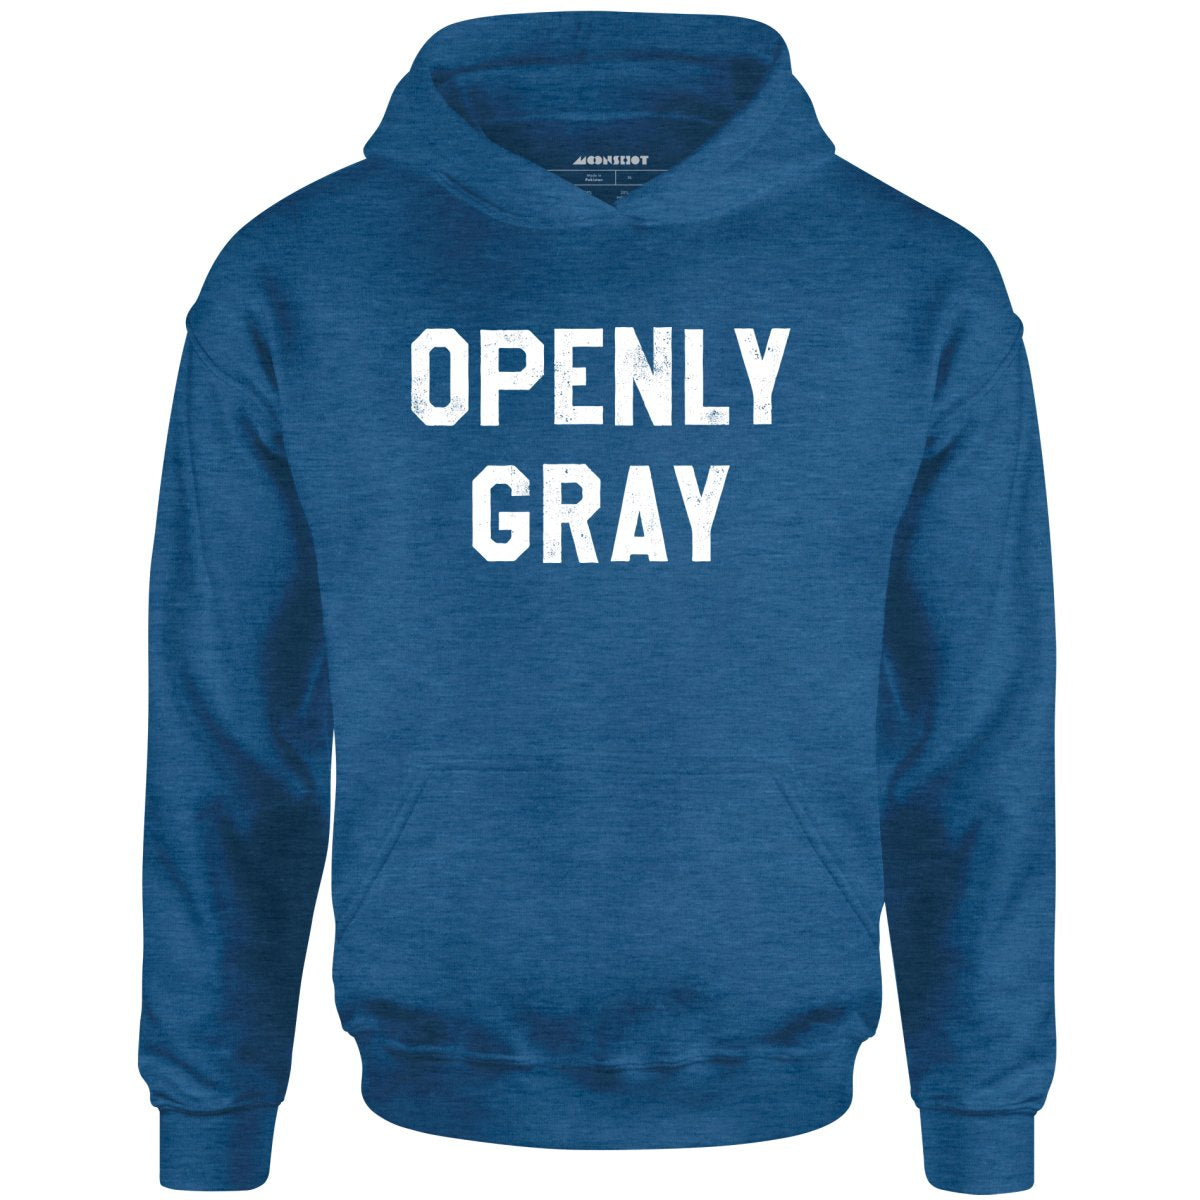 Openly Gray - Unisex Hoodie